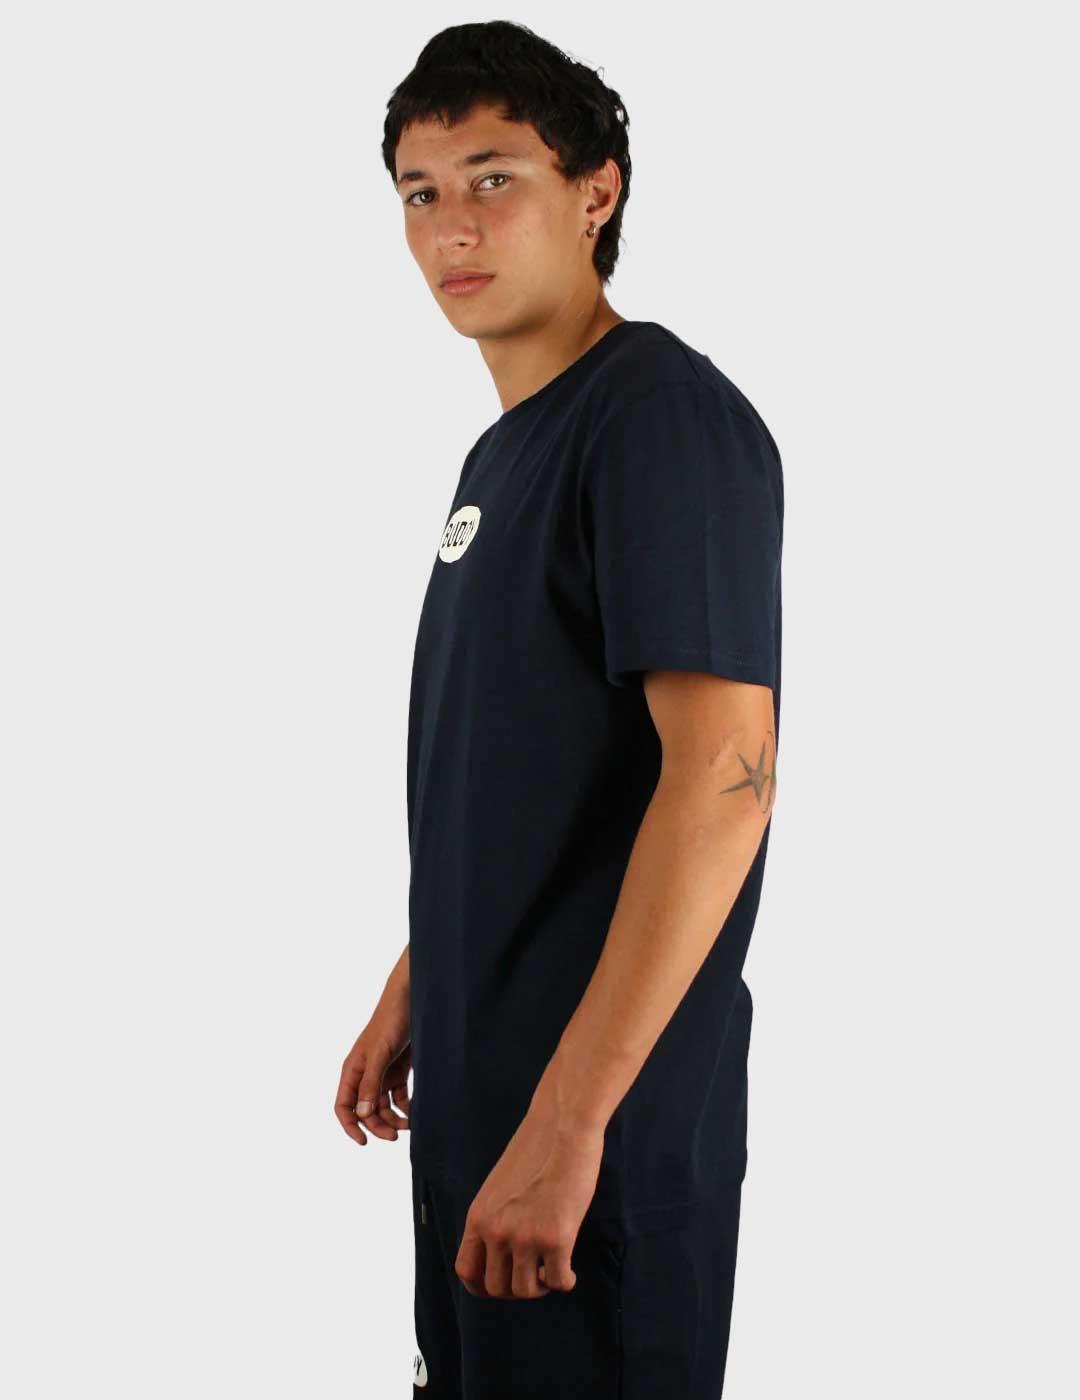 BuddySafado Camiseta azul marino para hombre